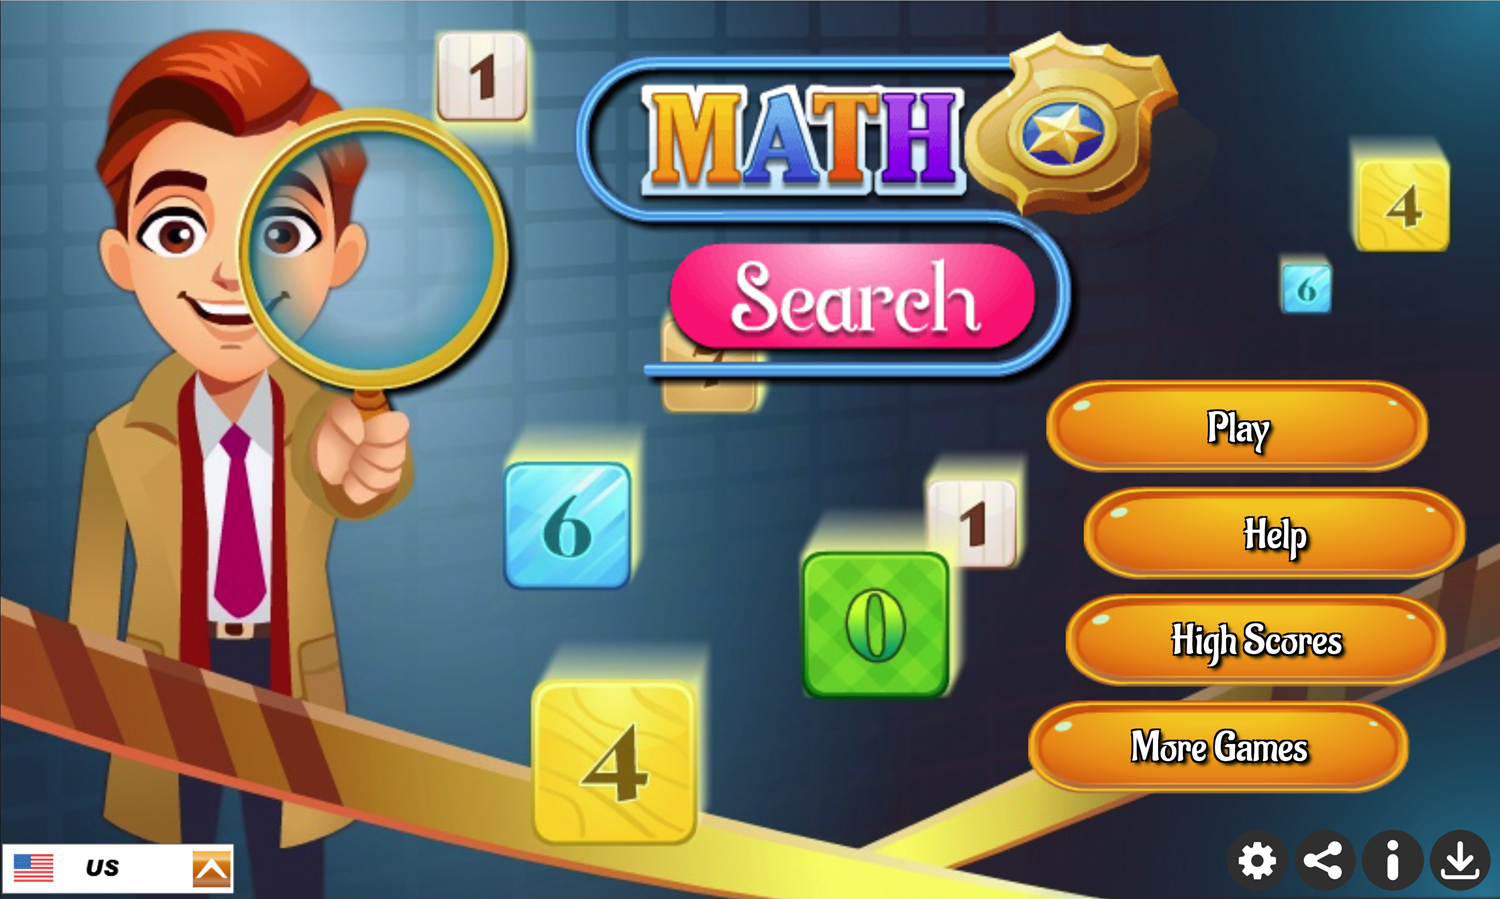 Math Search Game Welcome Screen Screenshot.